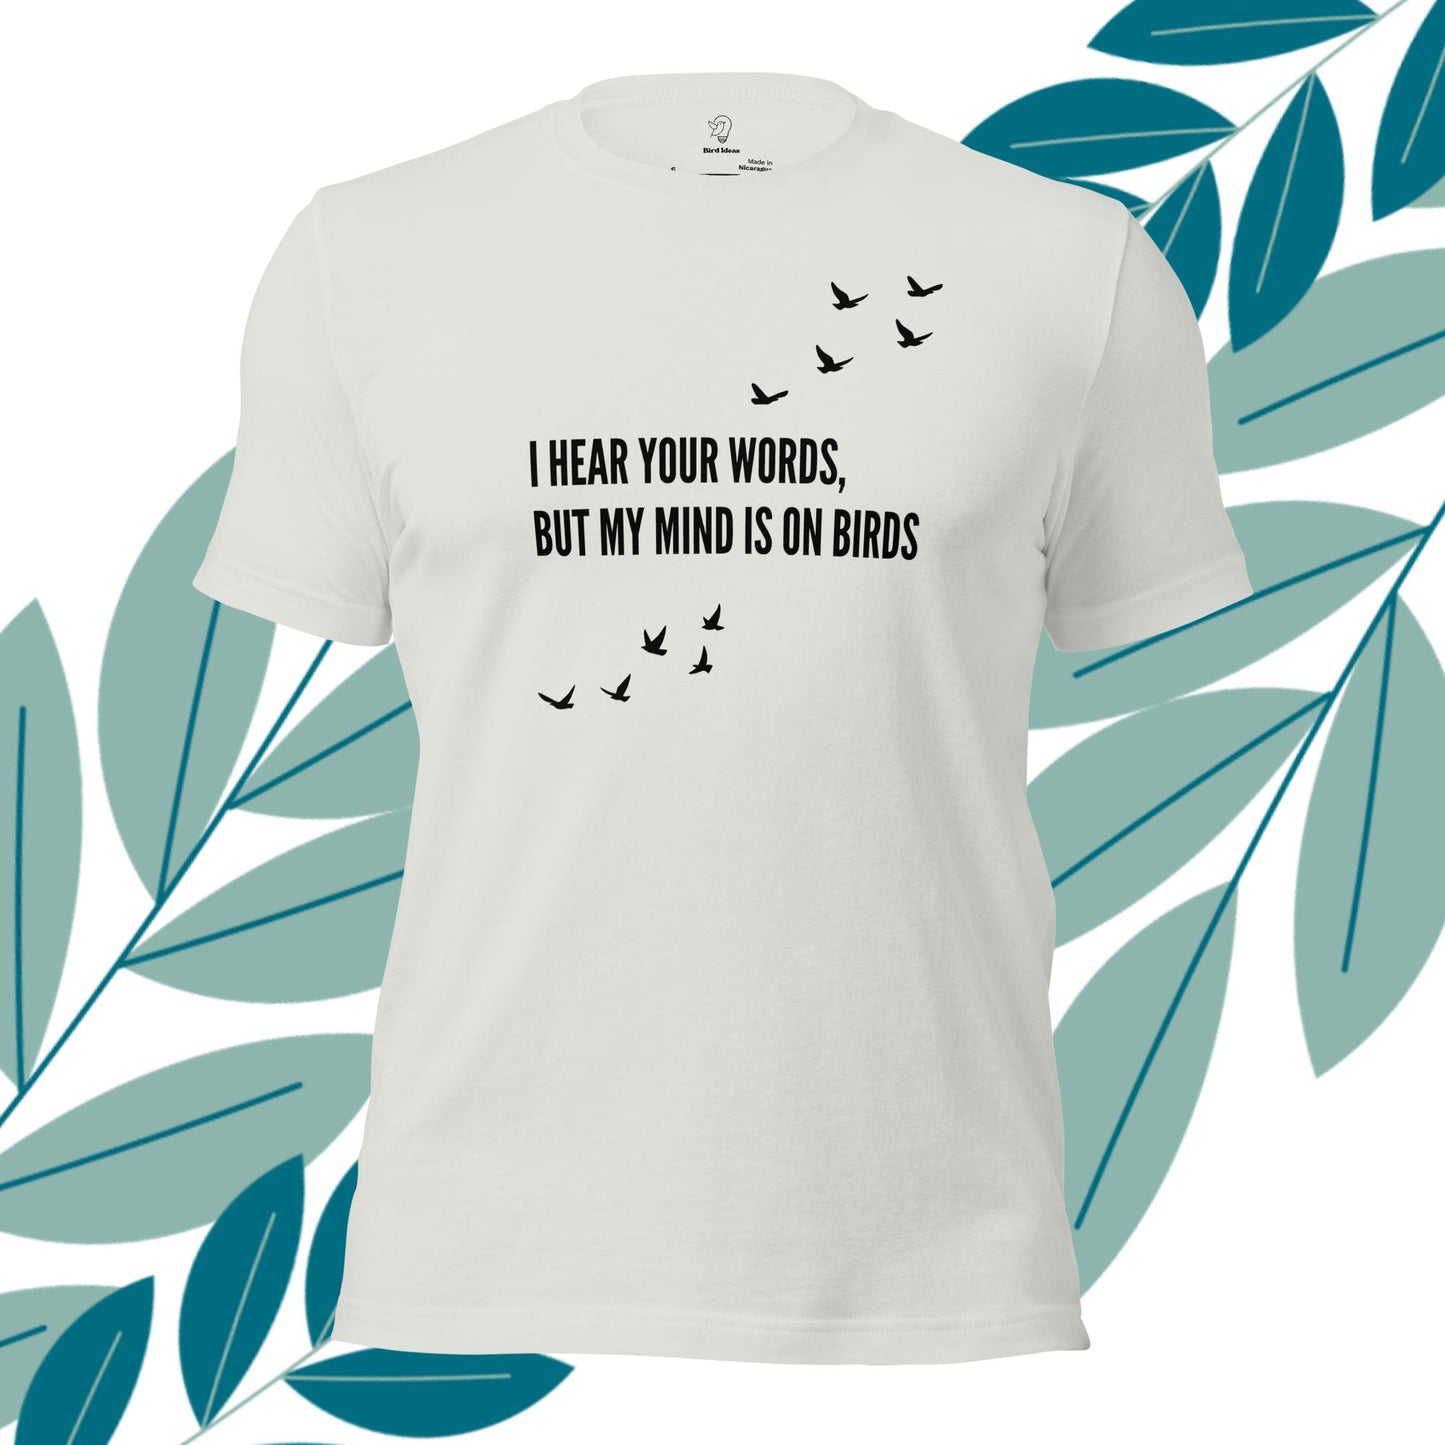 Birds on the Mind T-shirt